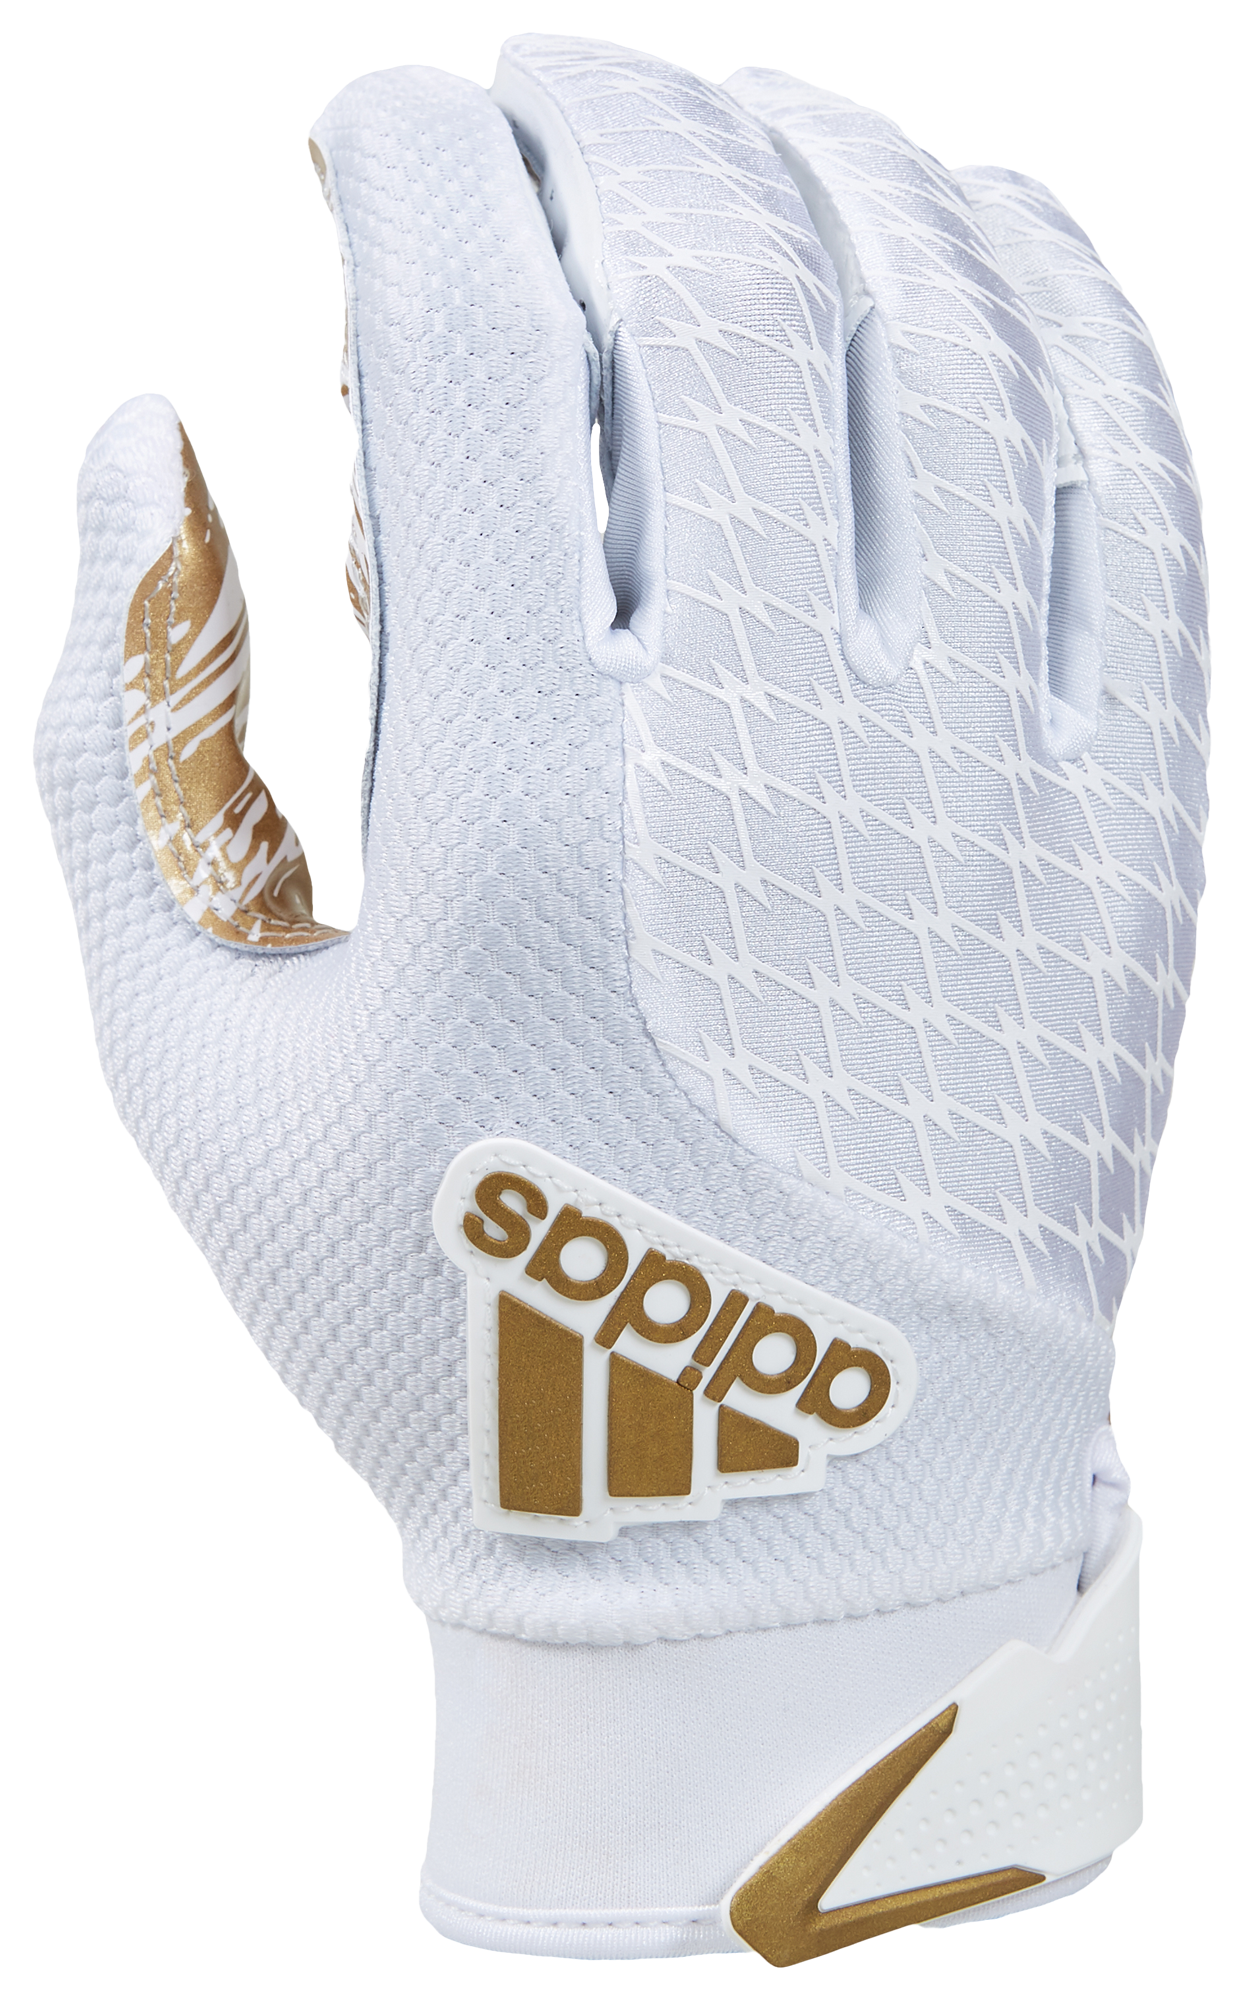 adidas black and gold football gloves